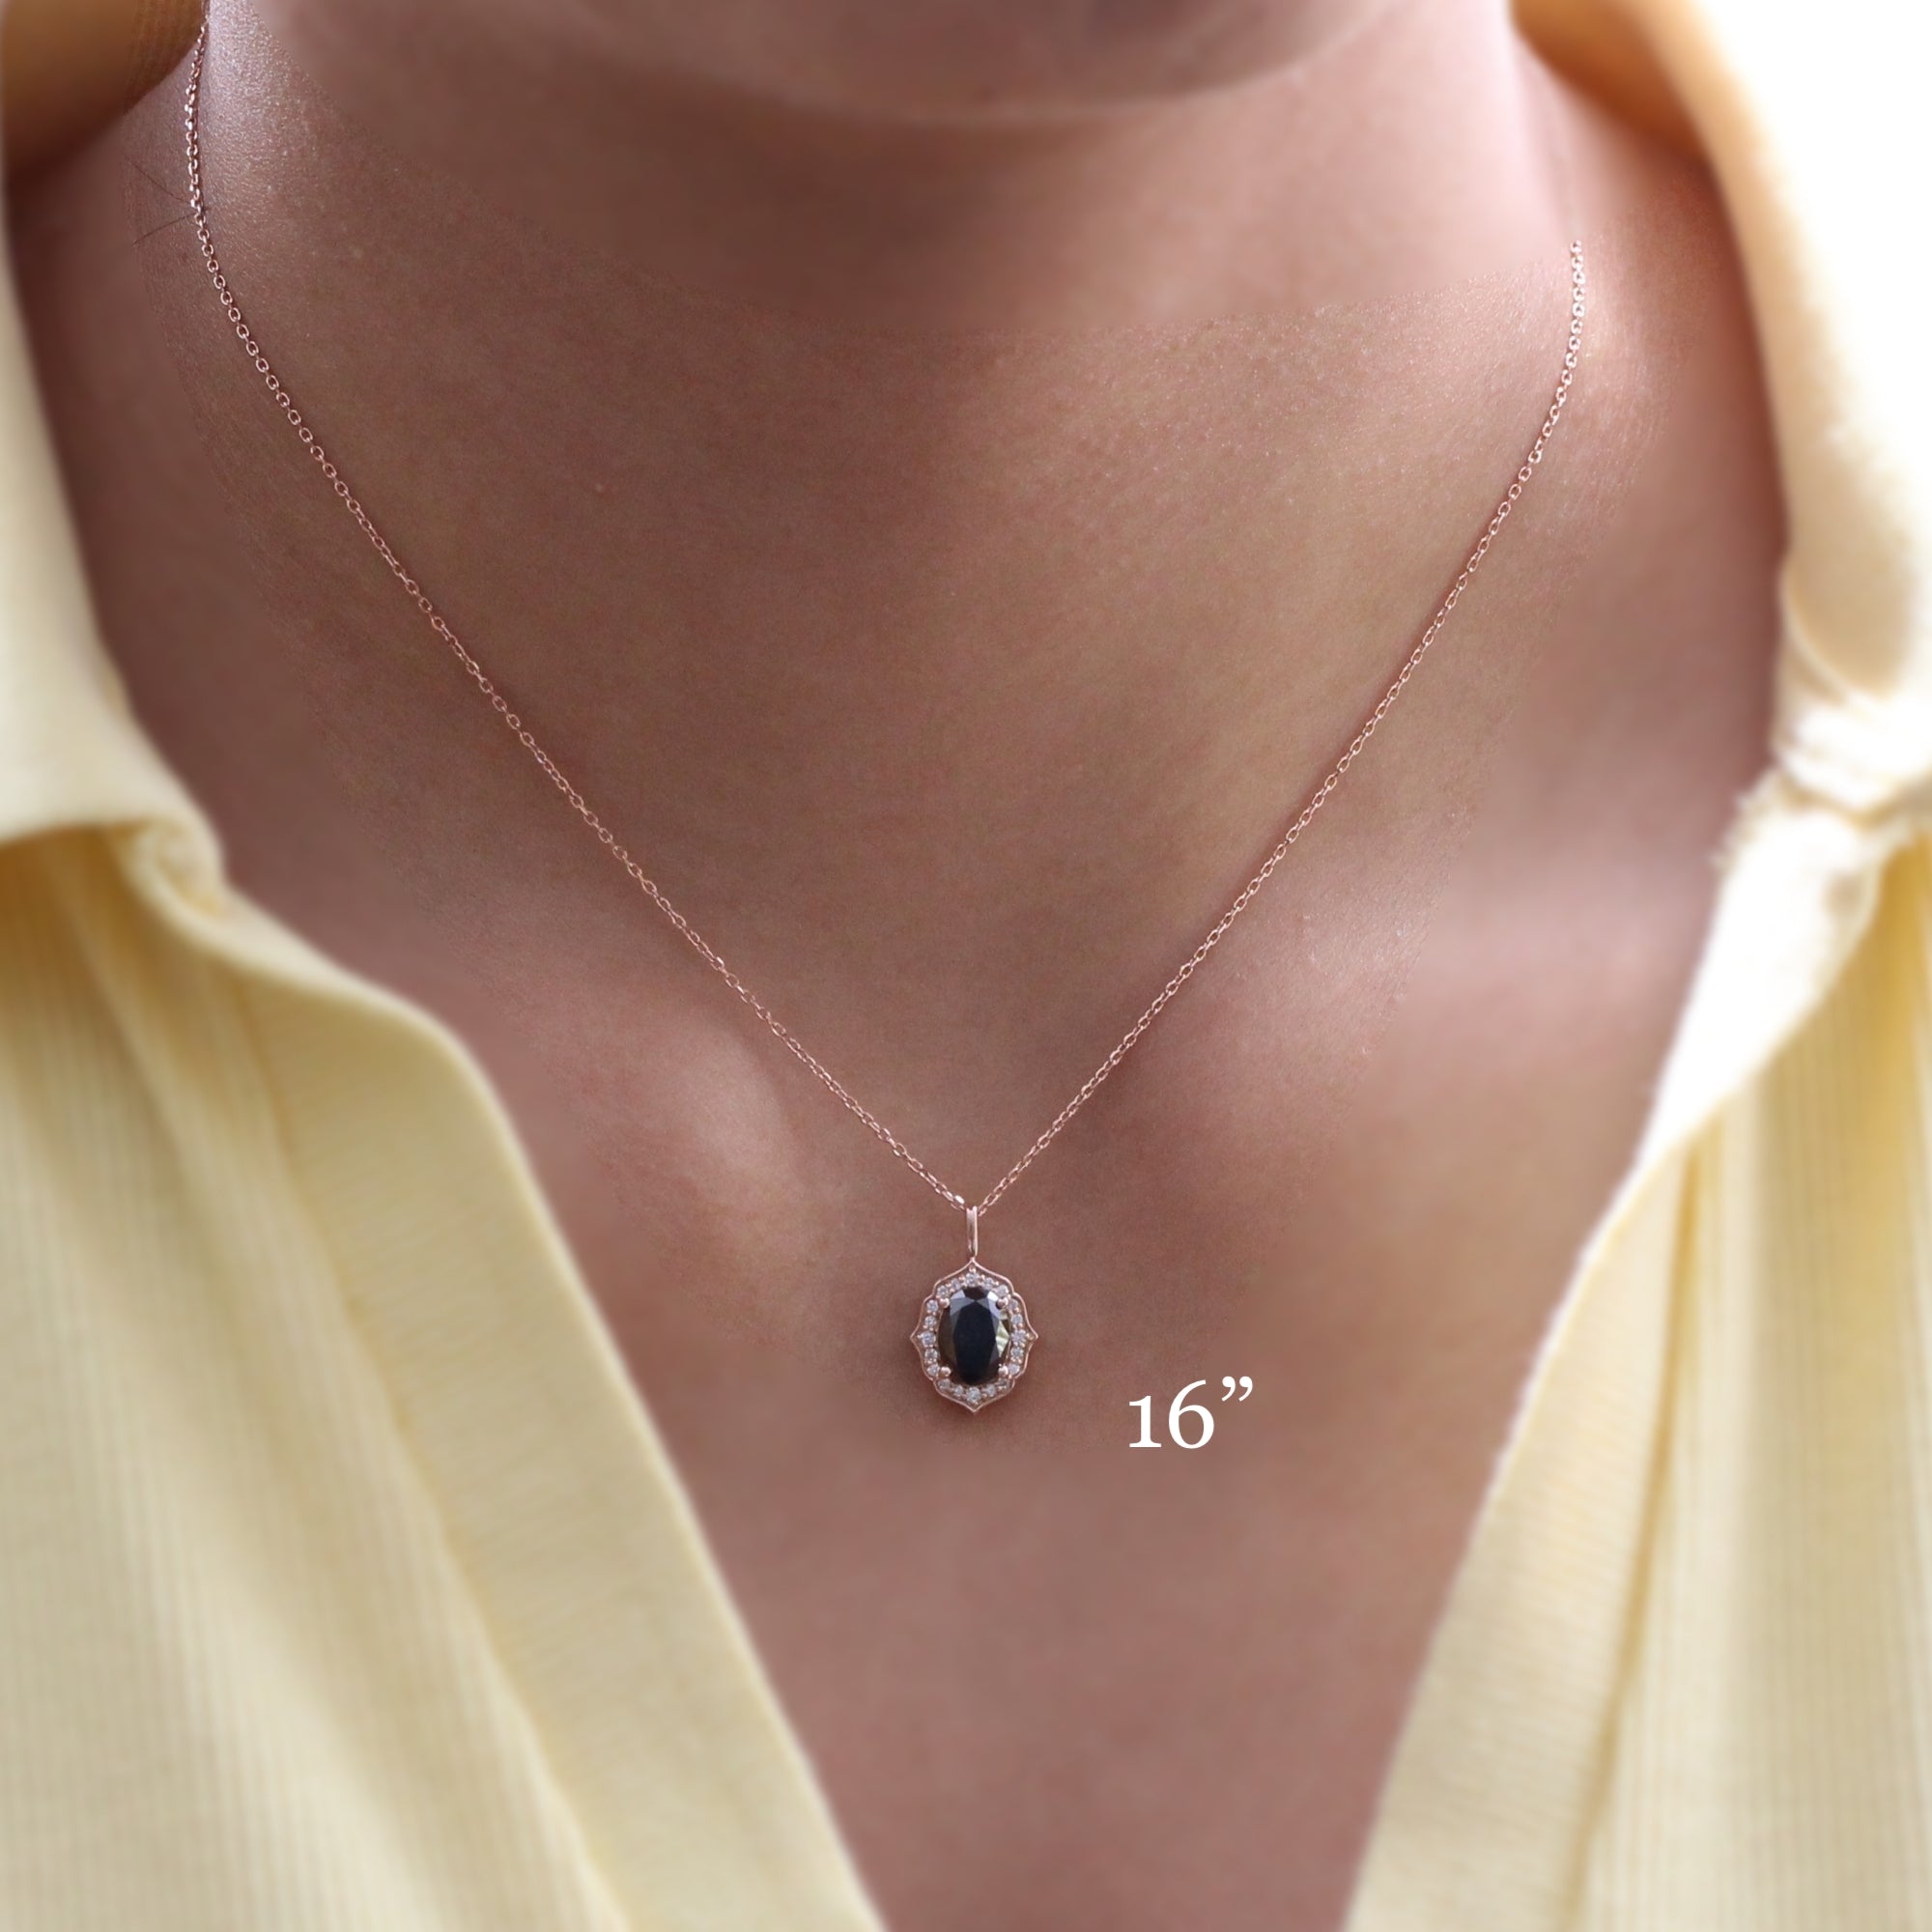 oval black diamond necklace rose gold vintage style black diamond drop pendant necklace la more design jewelry